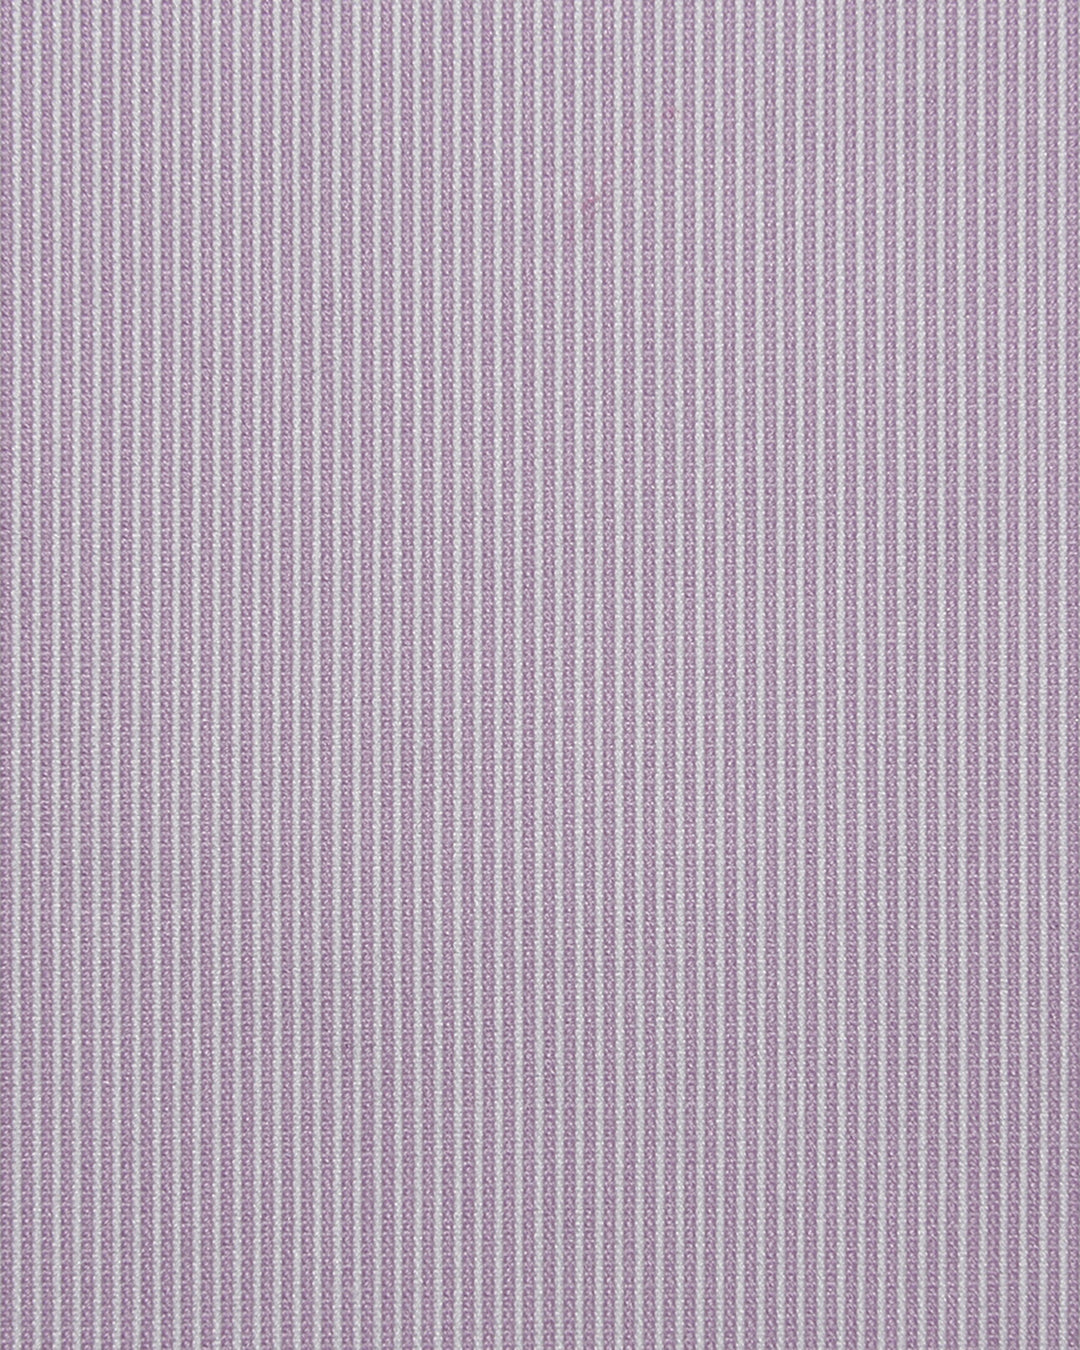 Cotton Poly: Purple Textured Pin Stripes